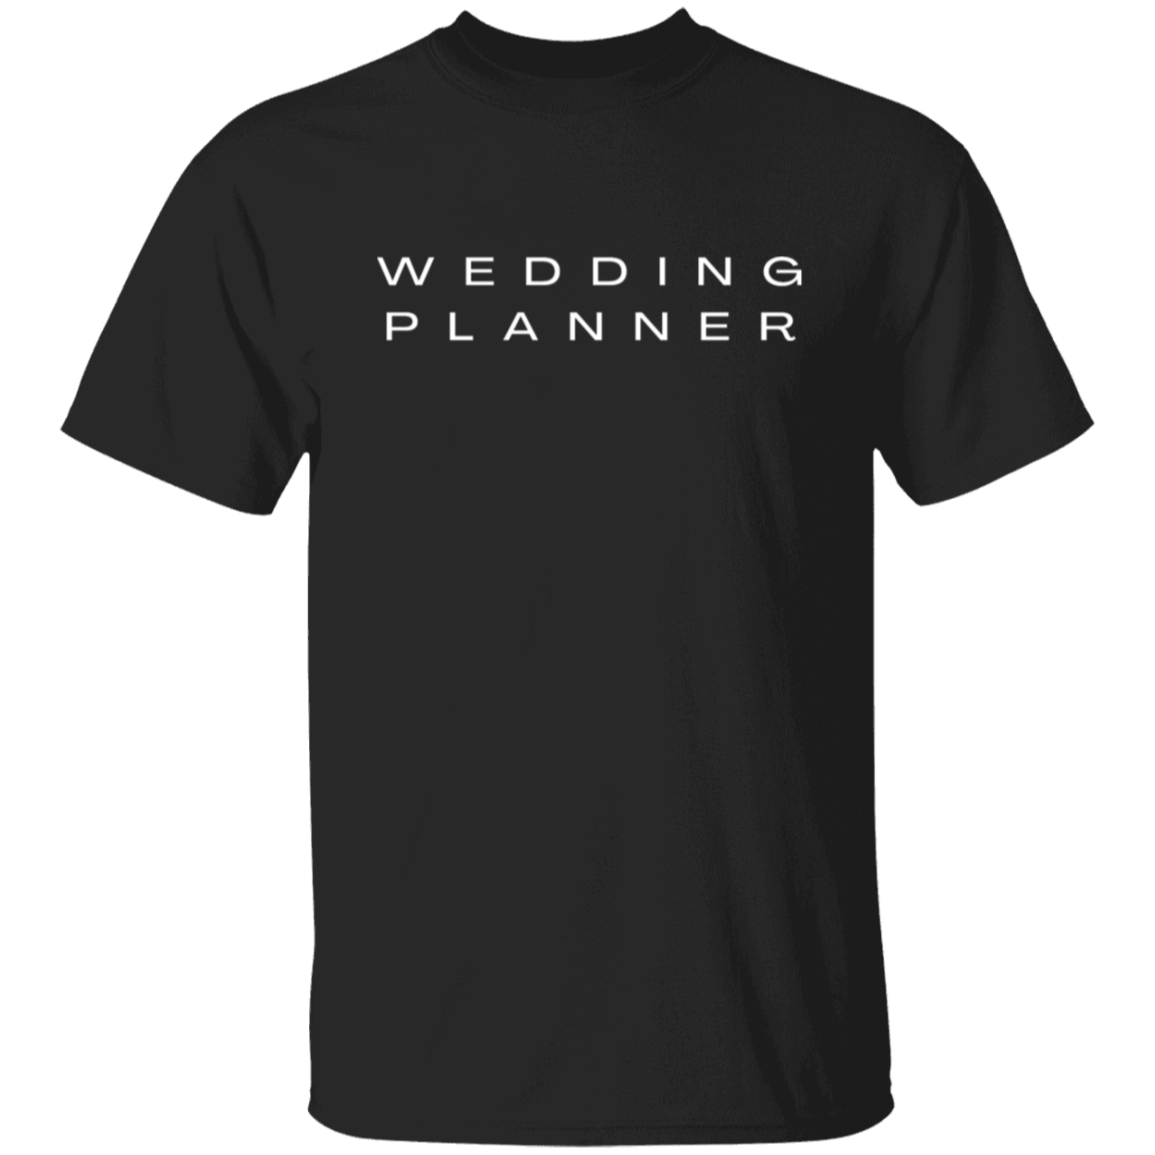 1030 - Camiseta unisex, Planificador de bodas, Planificador de eventos